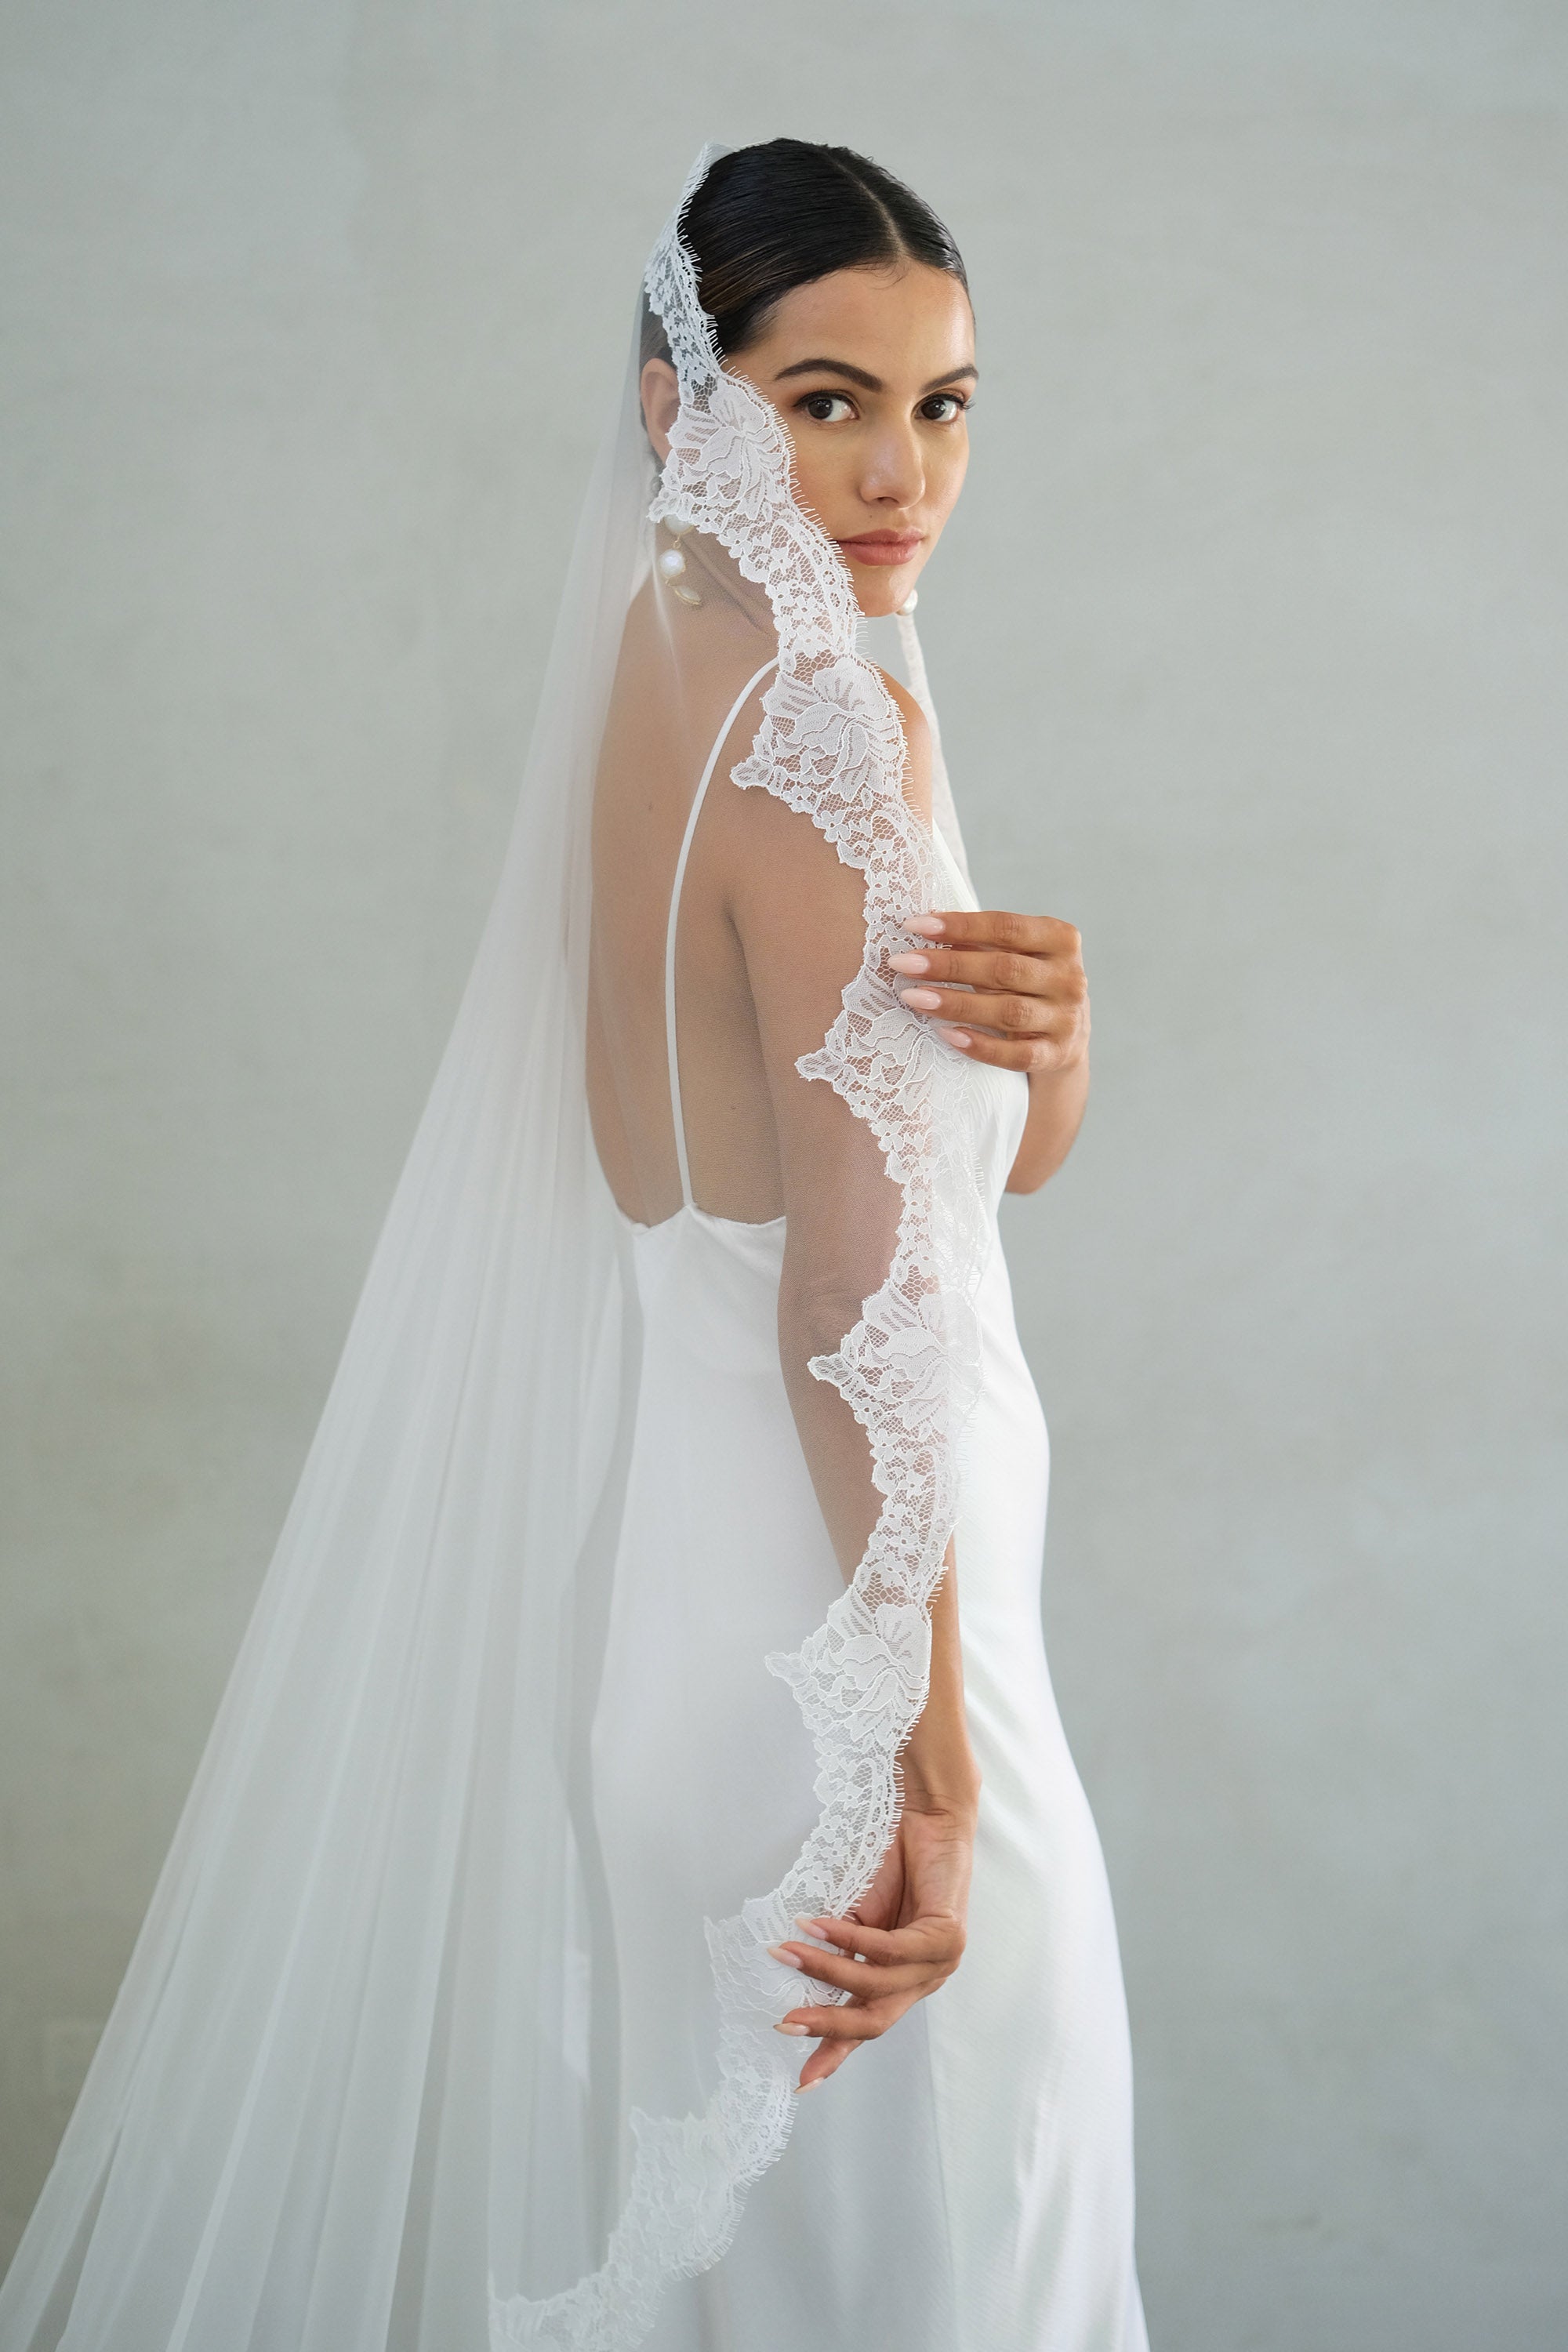 Lace Wedding Veils  Mantilla Wedding Veils w/ Lace Edging